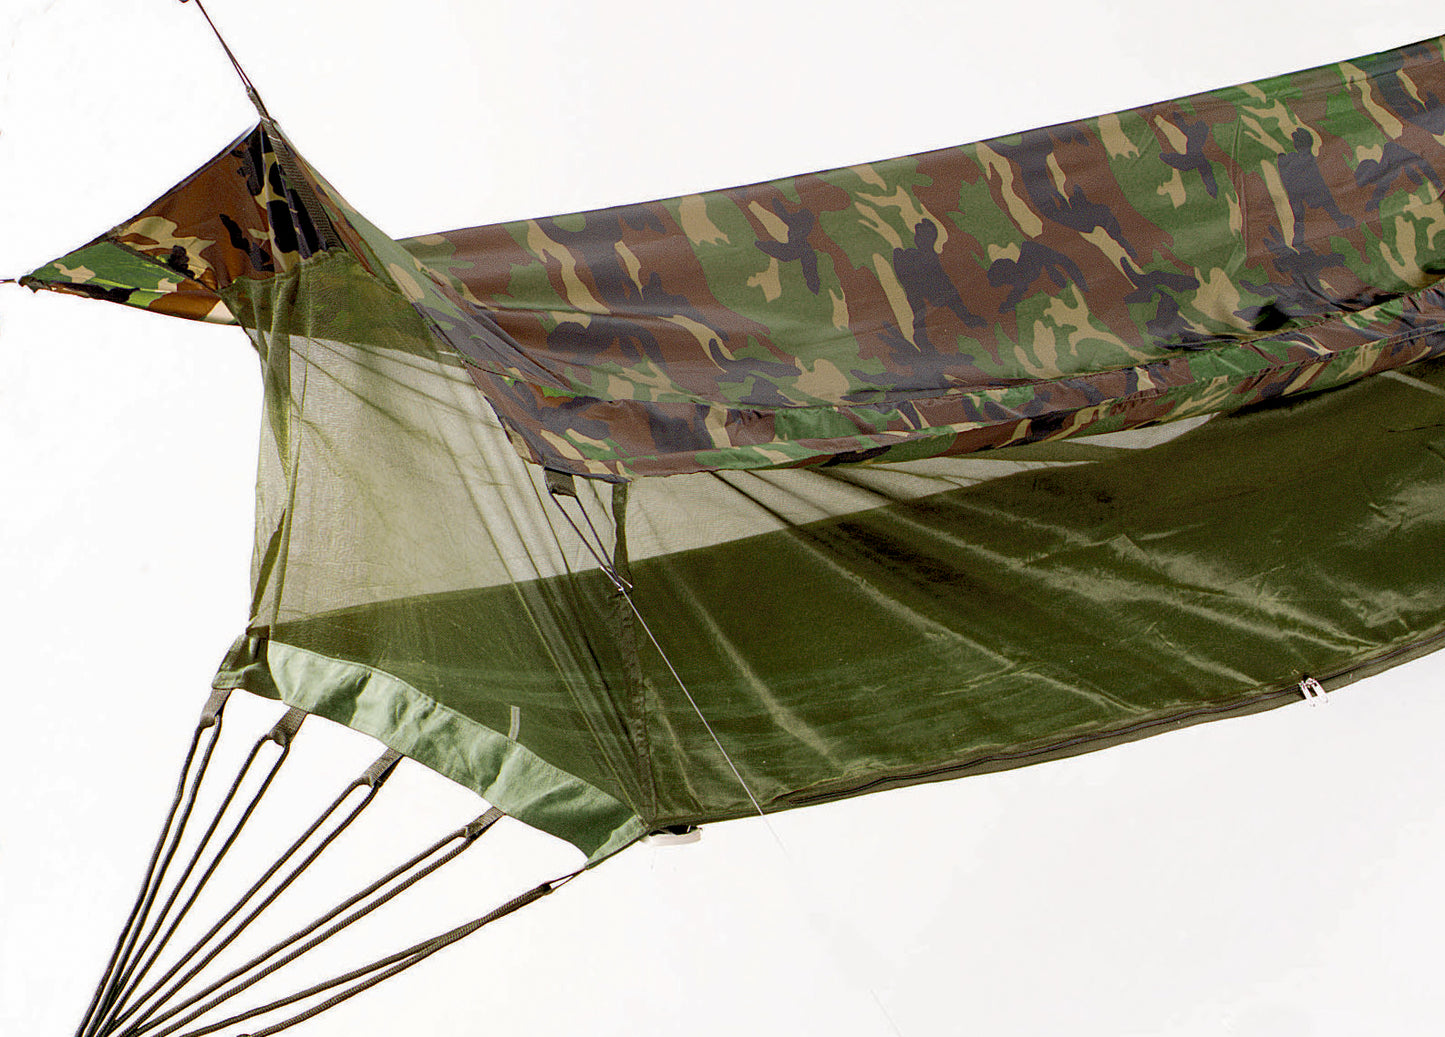 Milspec Jungle Hammock Hammocks MilTac Tactical Military Outdoor Gear Australia